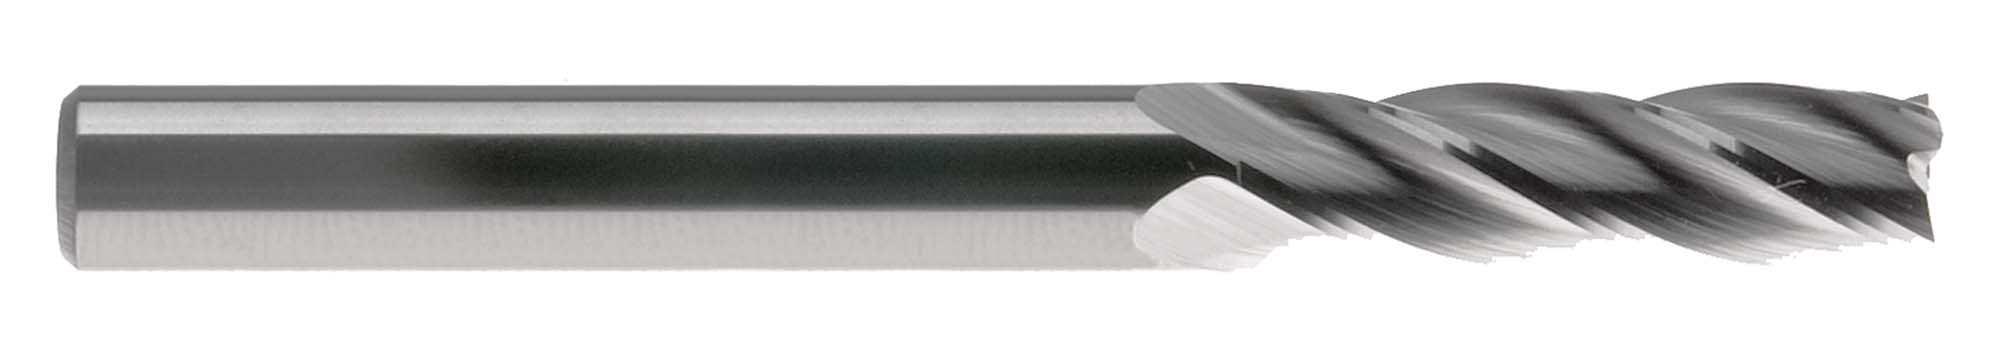 E710-1/2 1/2" 4 Flute Long USA Solid Micrograin Carbide End Mill